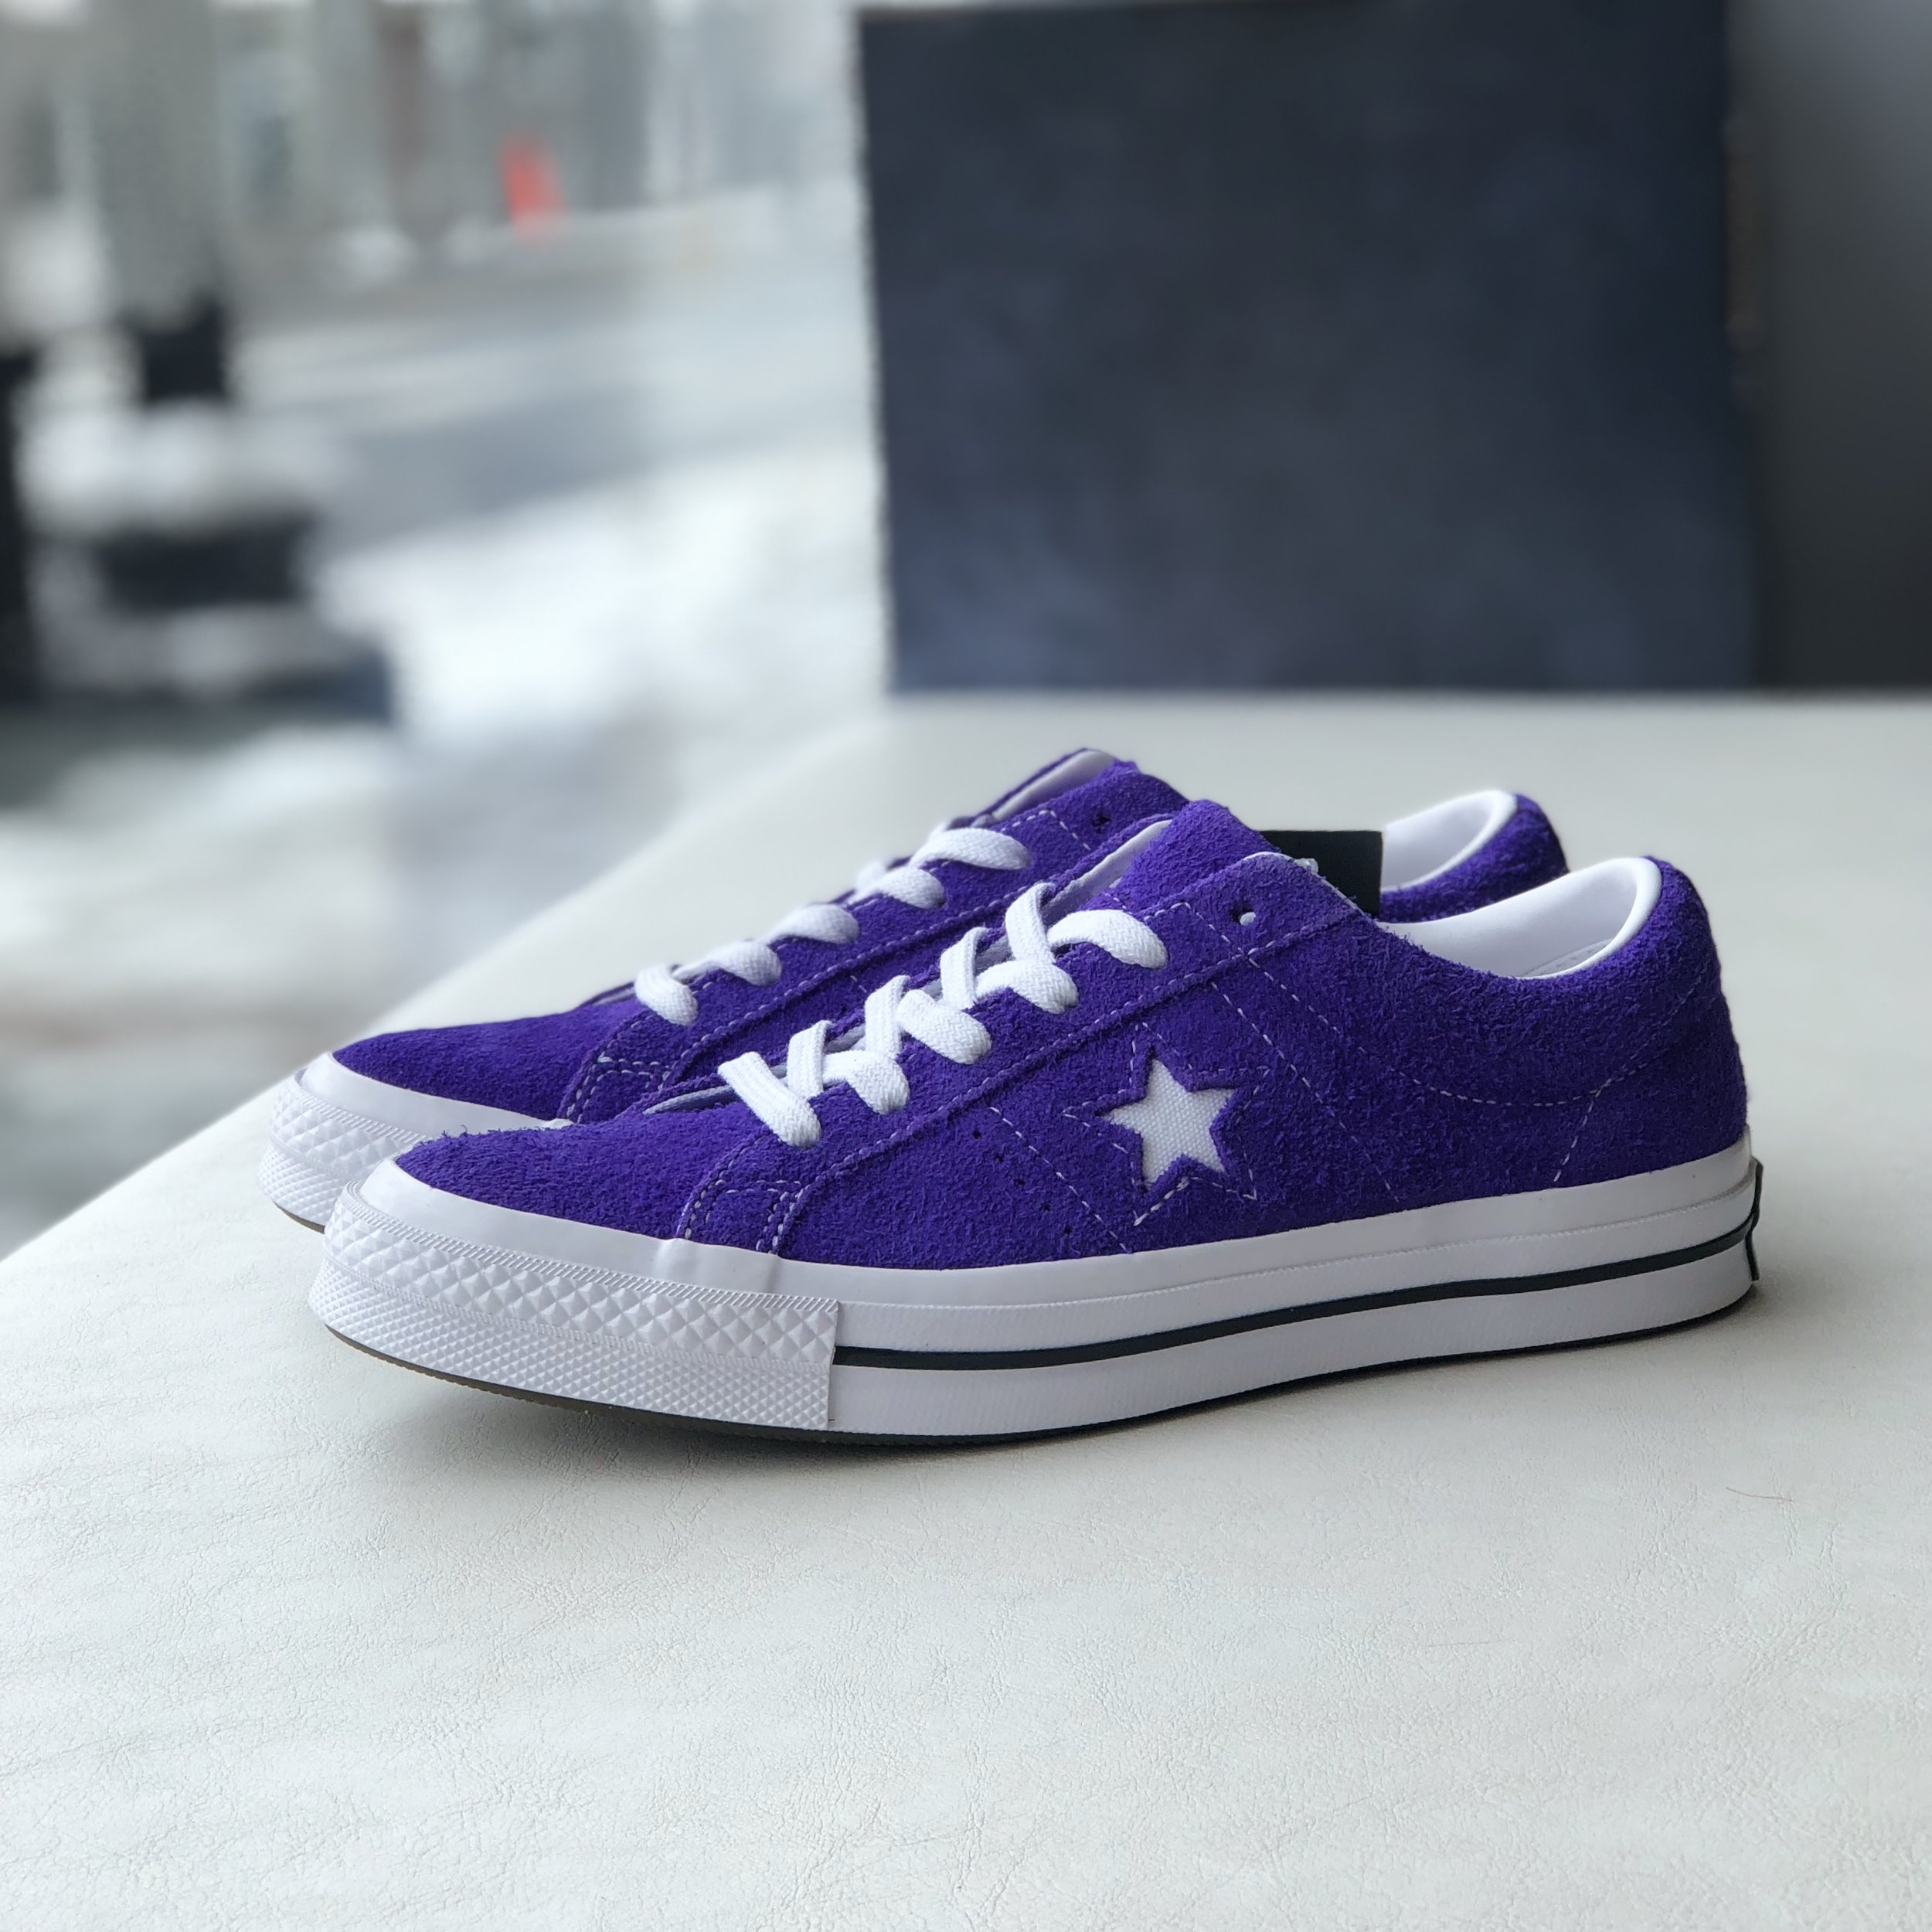 converse one star court purple